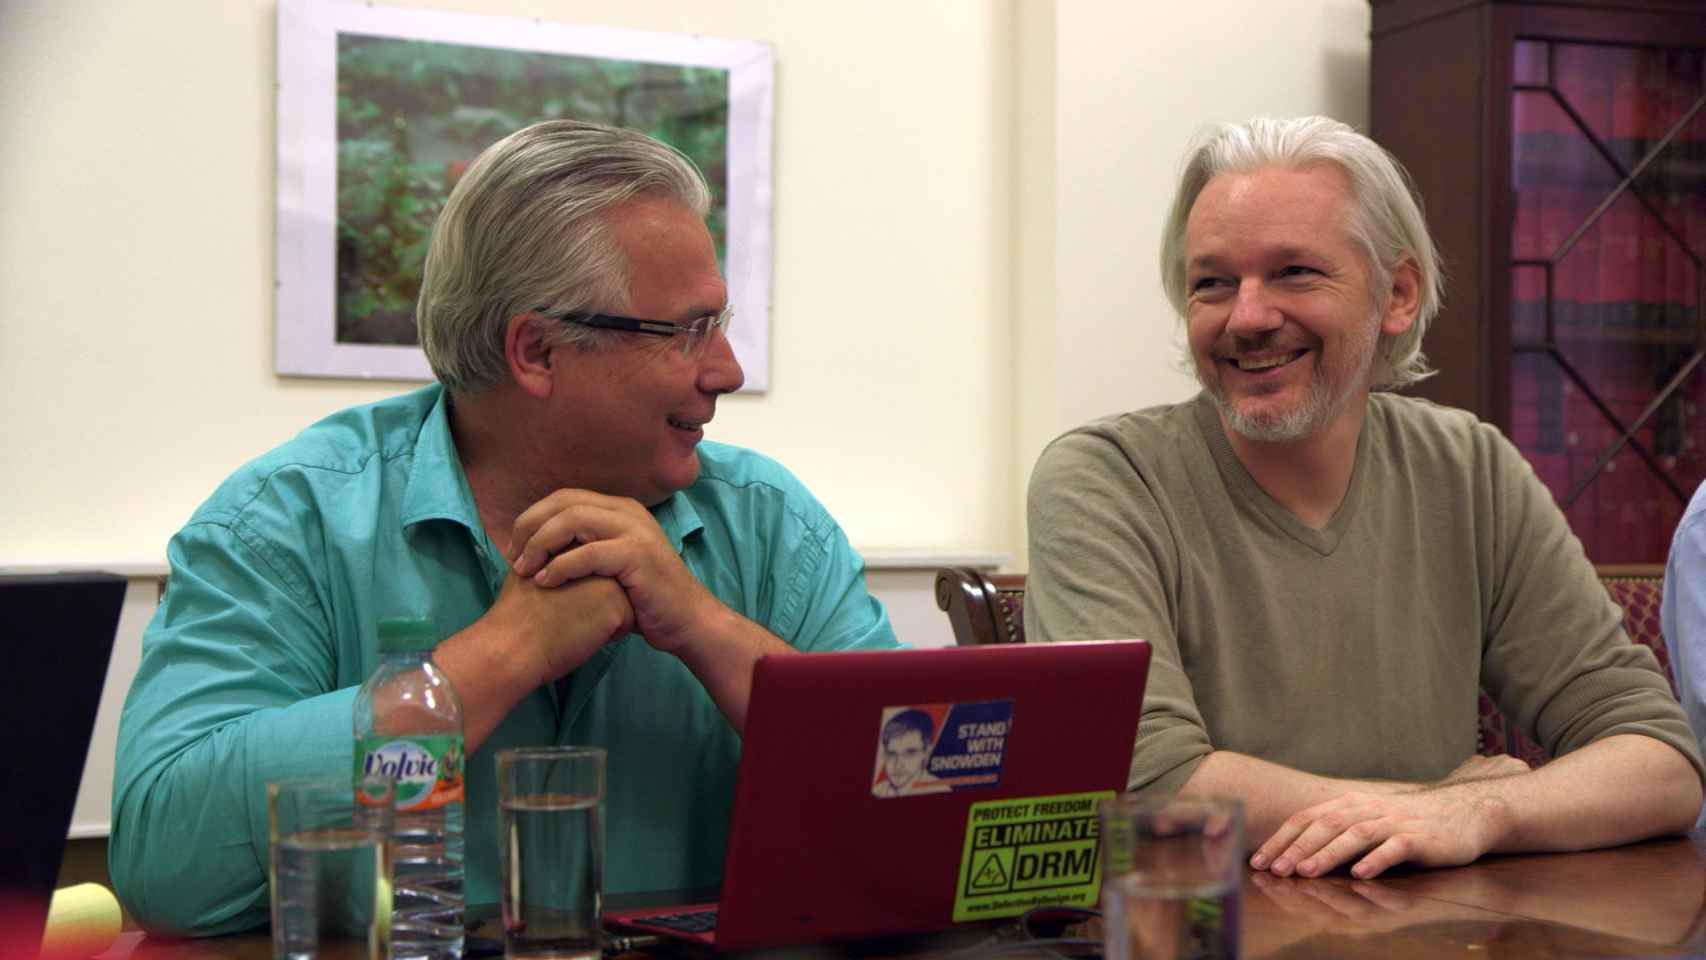 Baltasar Garzón y Julian Assange en un fotograma del documental.